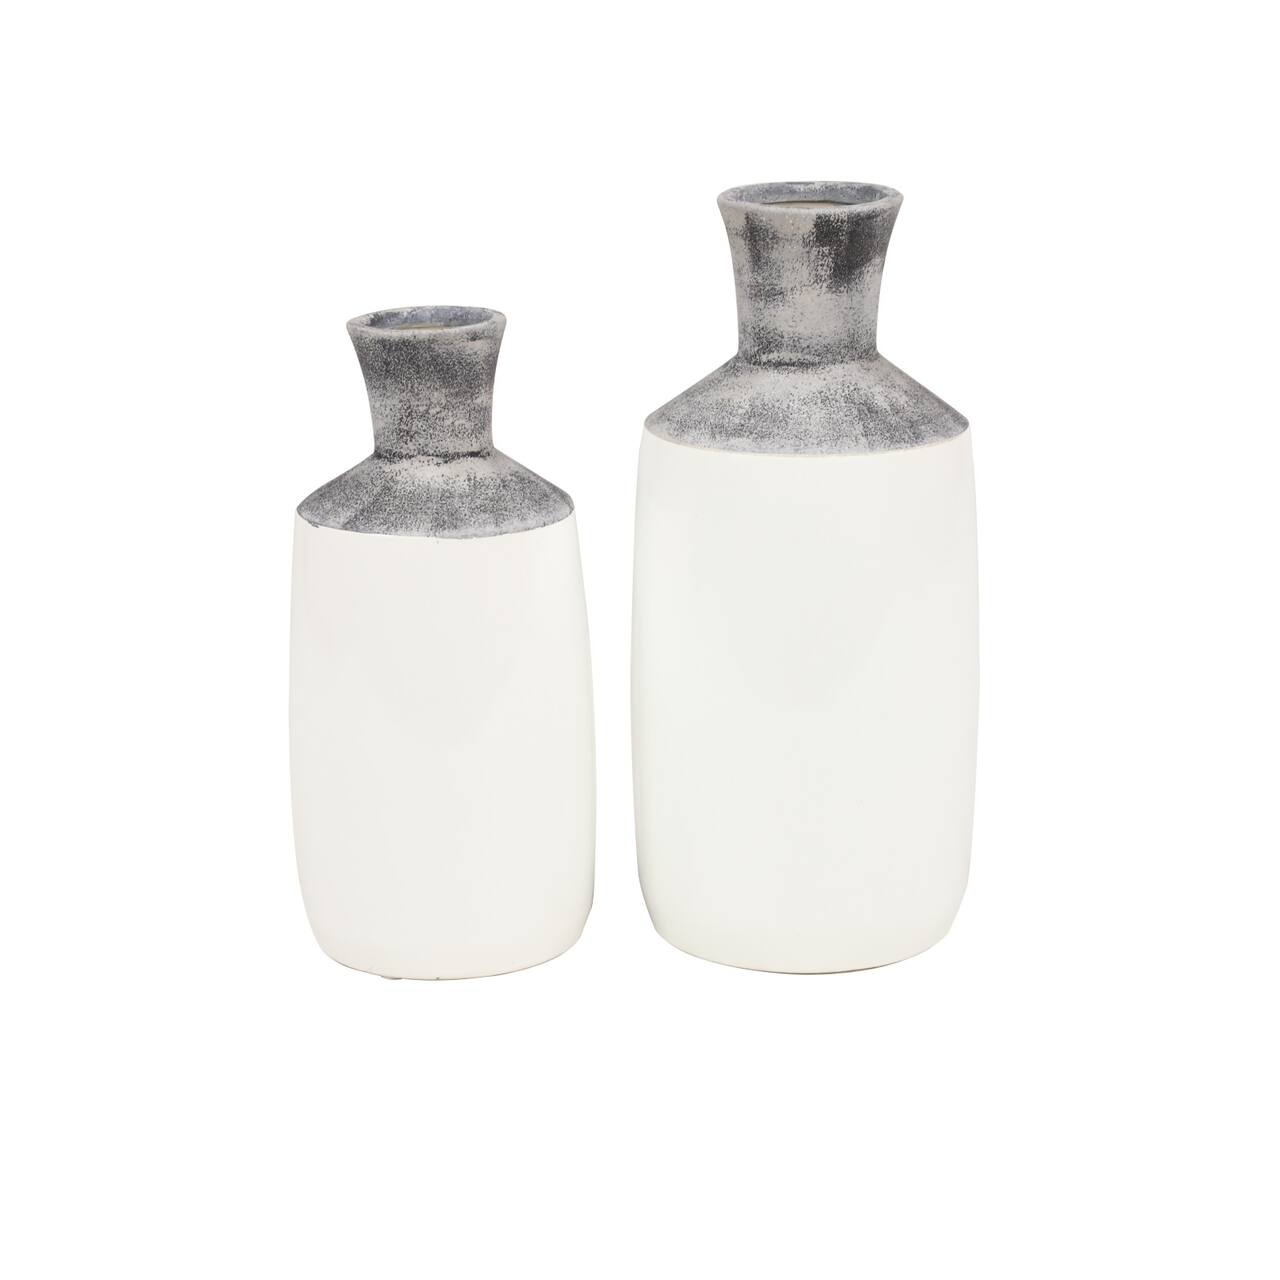 The Novogratz White Stoneware Coastal Style Vase Set